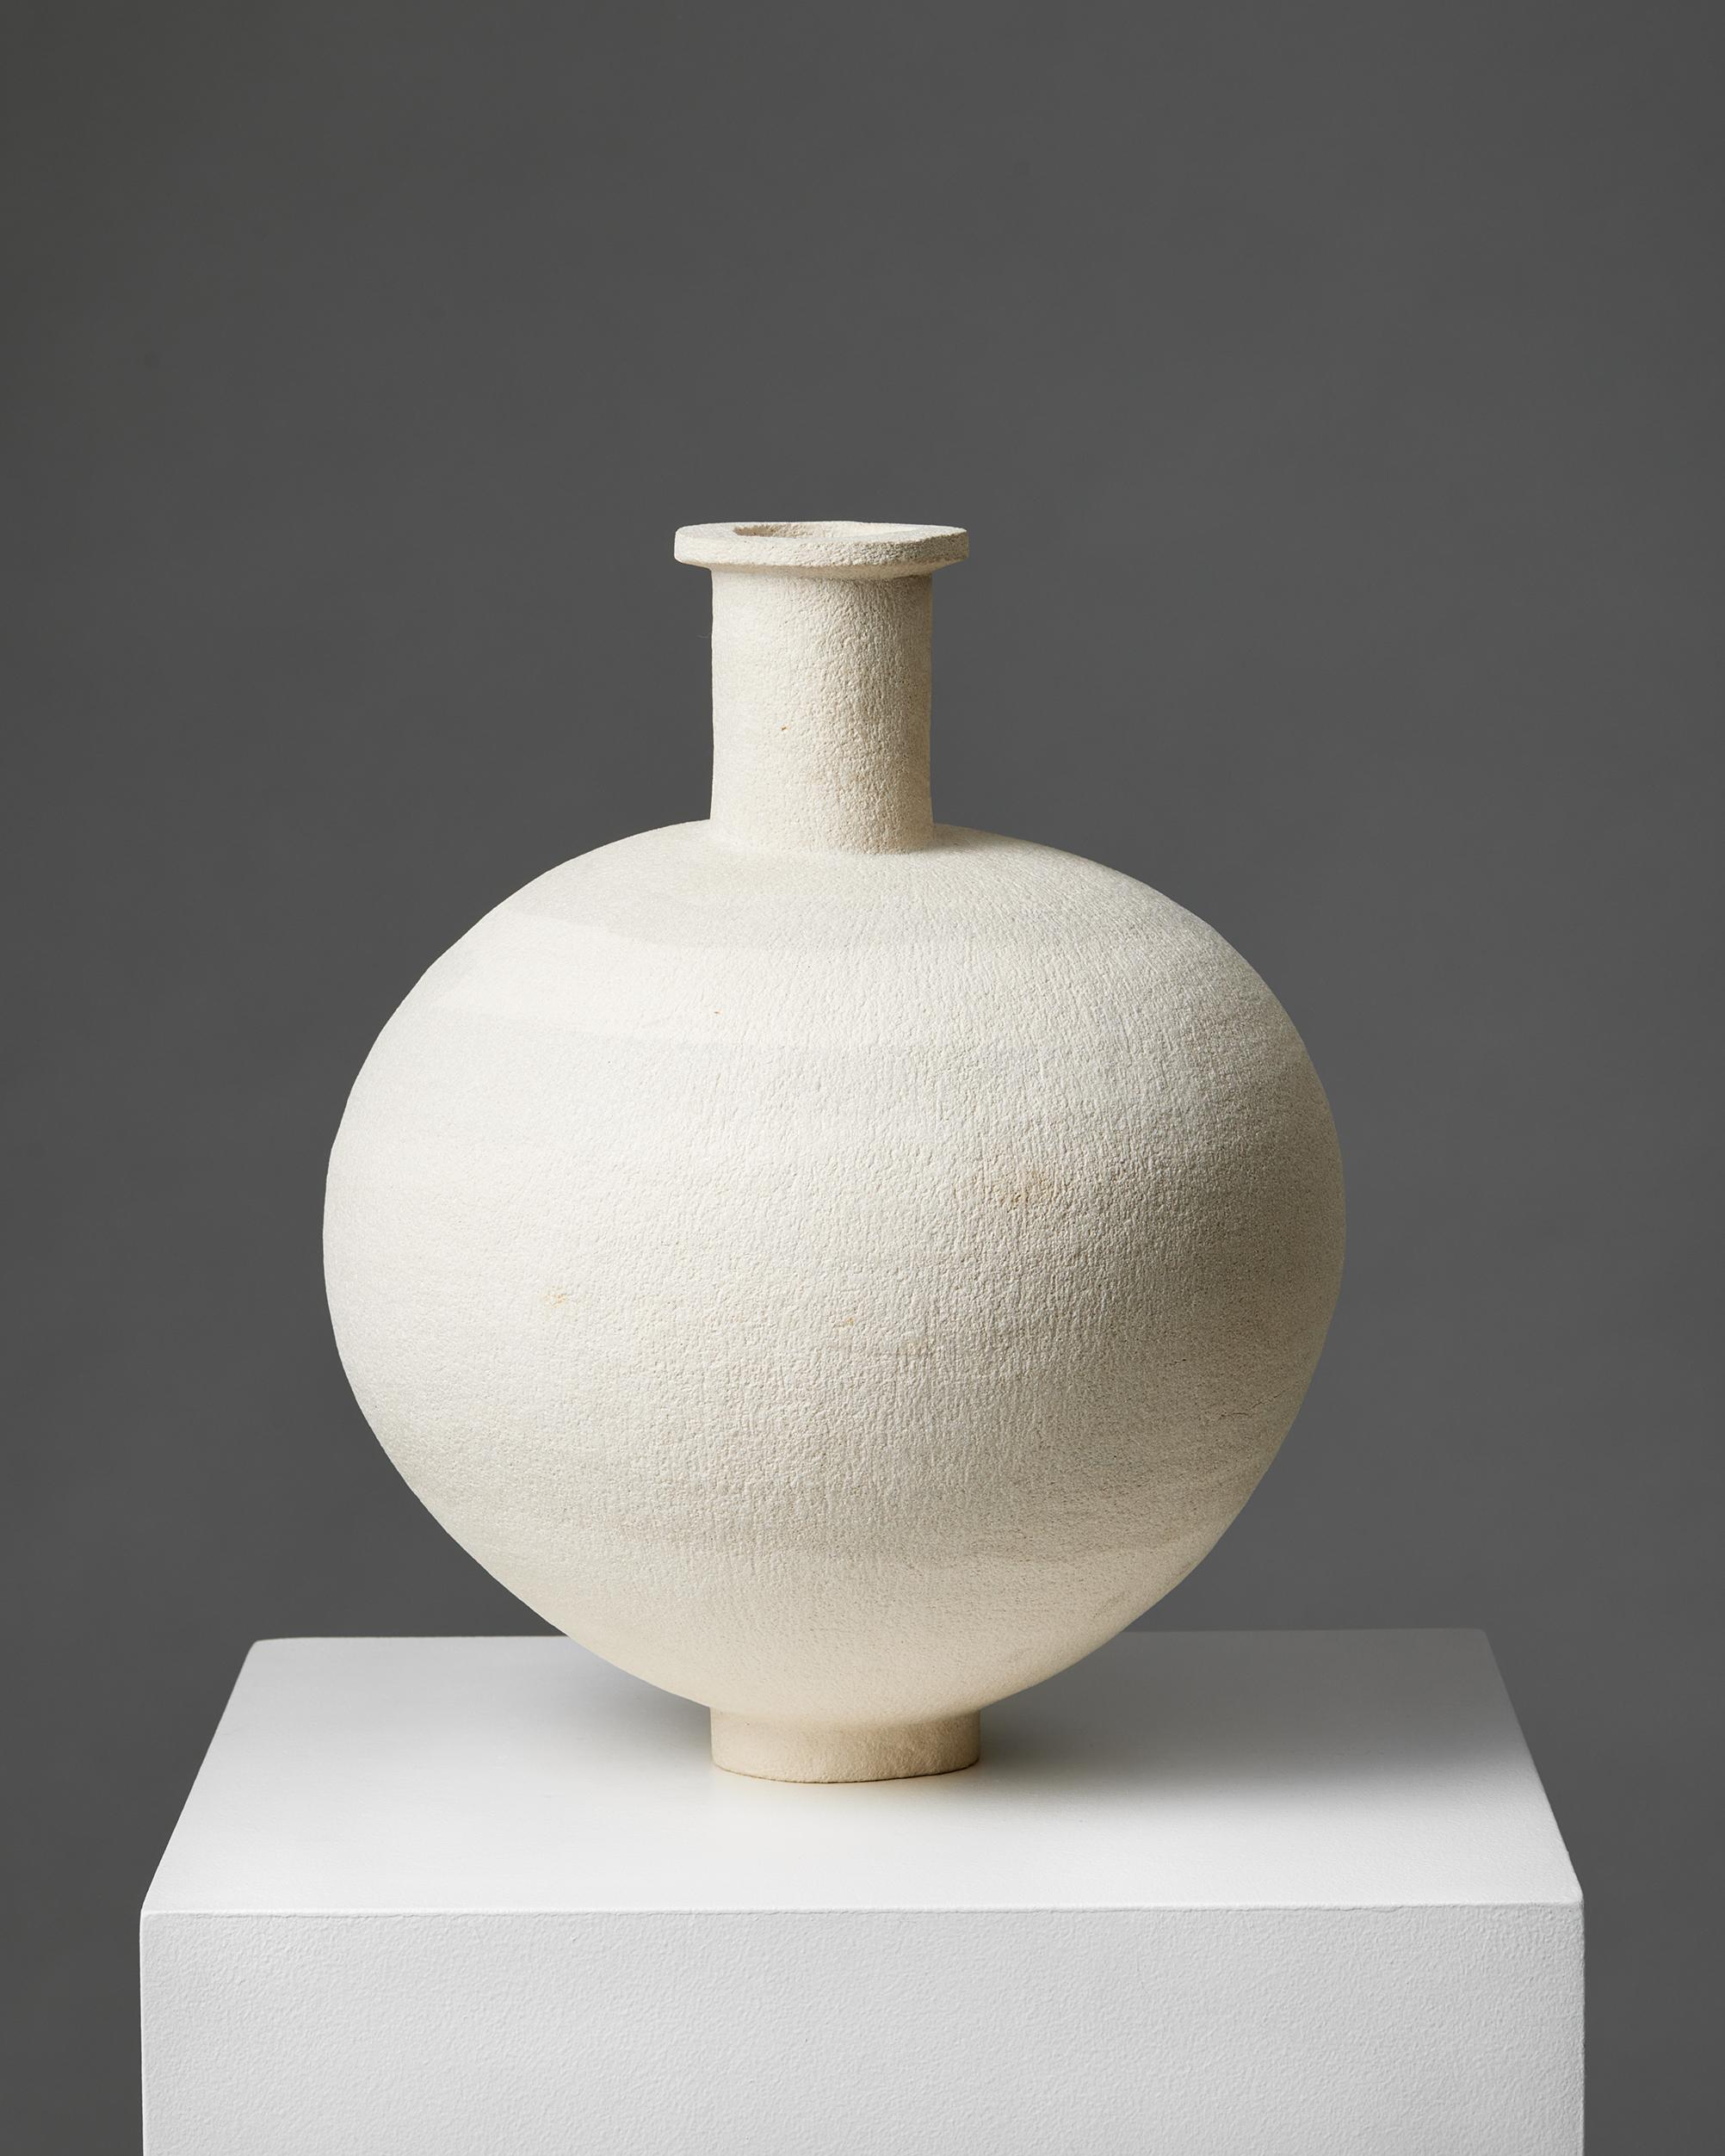 Vase, anonymous, Sweden, 1950s
Signed.

Stoneware.

H: 36 cm / 14''
Diameter: 26 cm / 10 1/4''